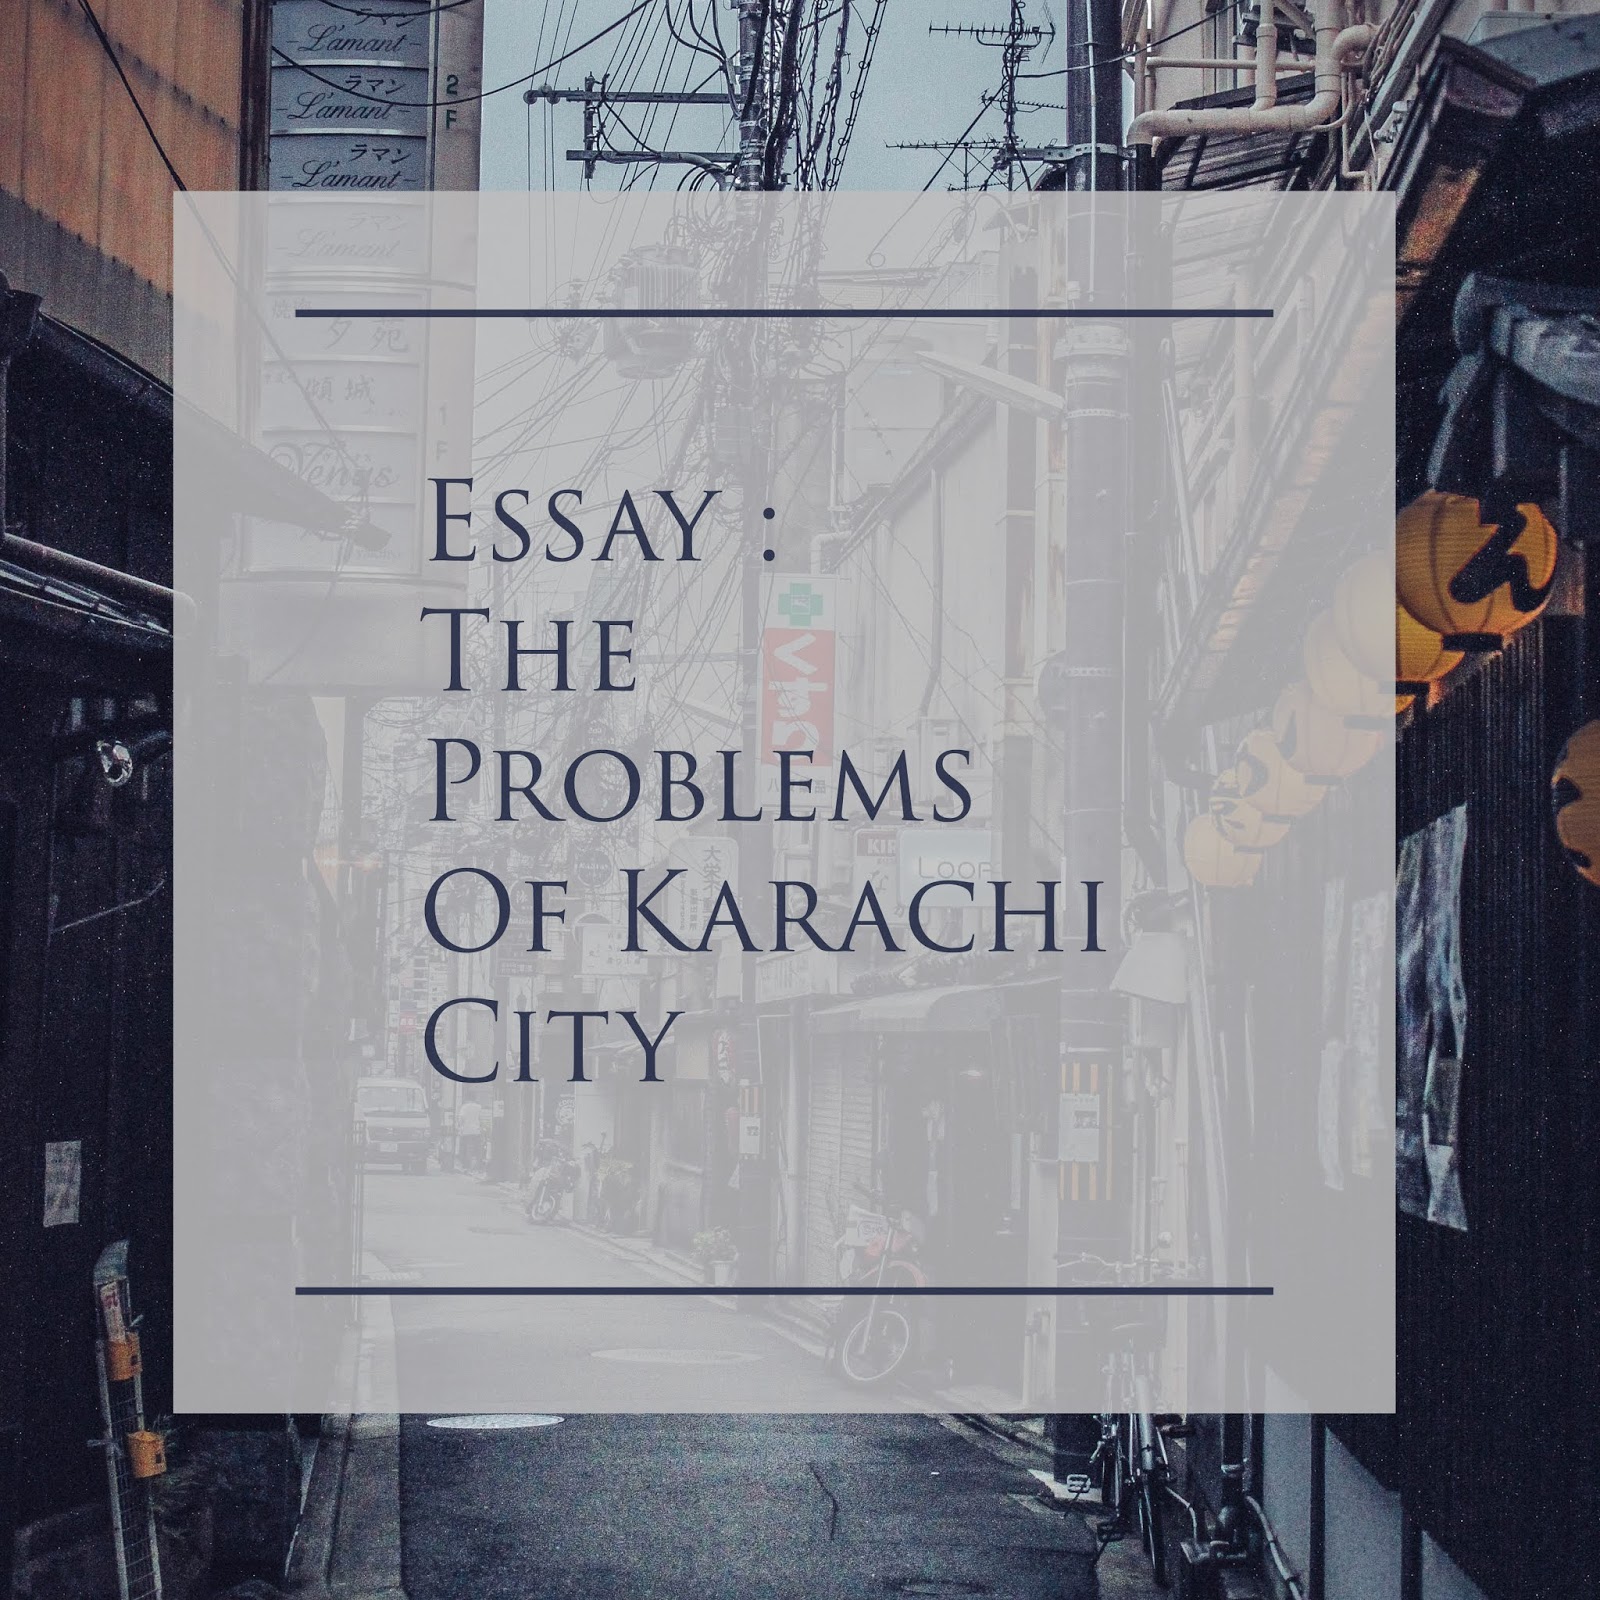 short essay on problems of karachi city